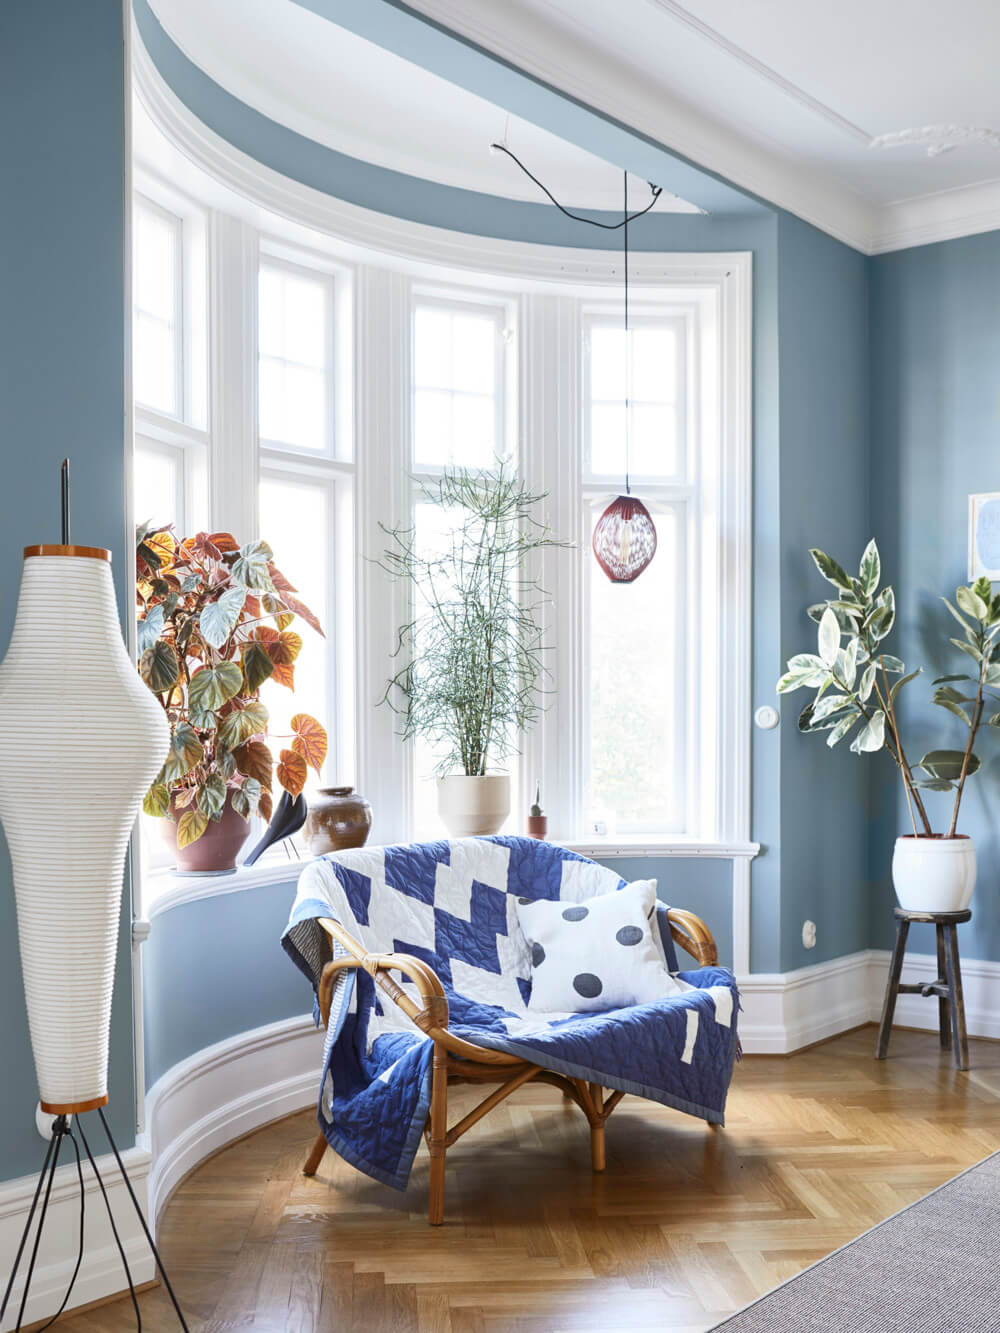 TheNordroom AScandinavianApartmentDecoratedinBlueandGreyTones3 A Scandinavian Apartment Decorated in Blue and Grey Tones